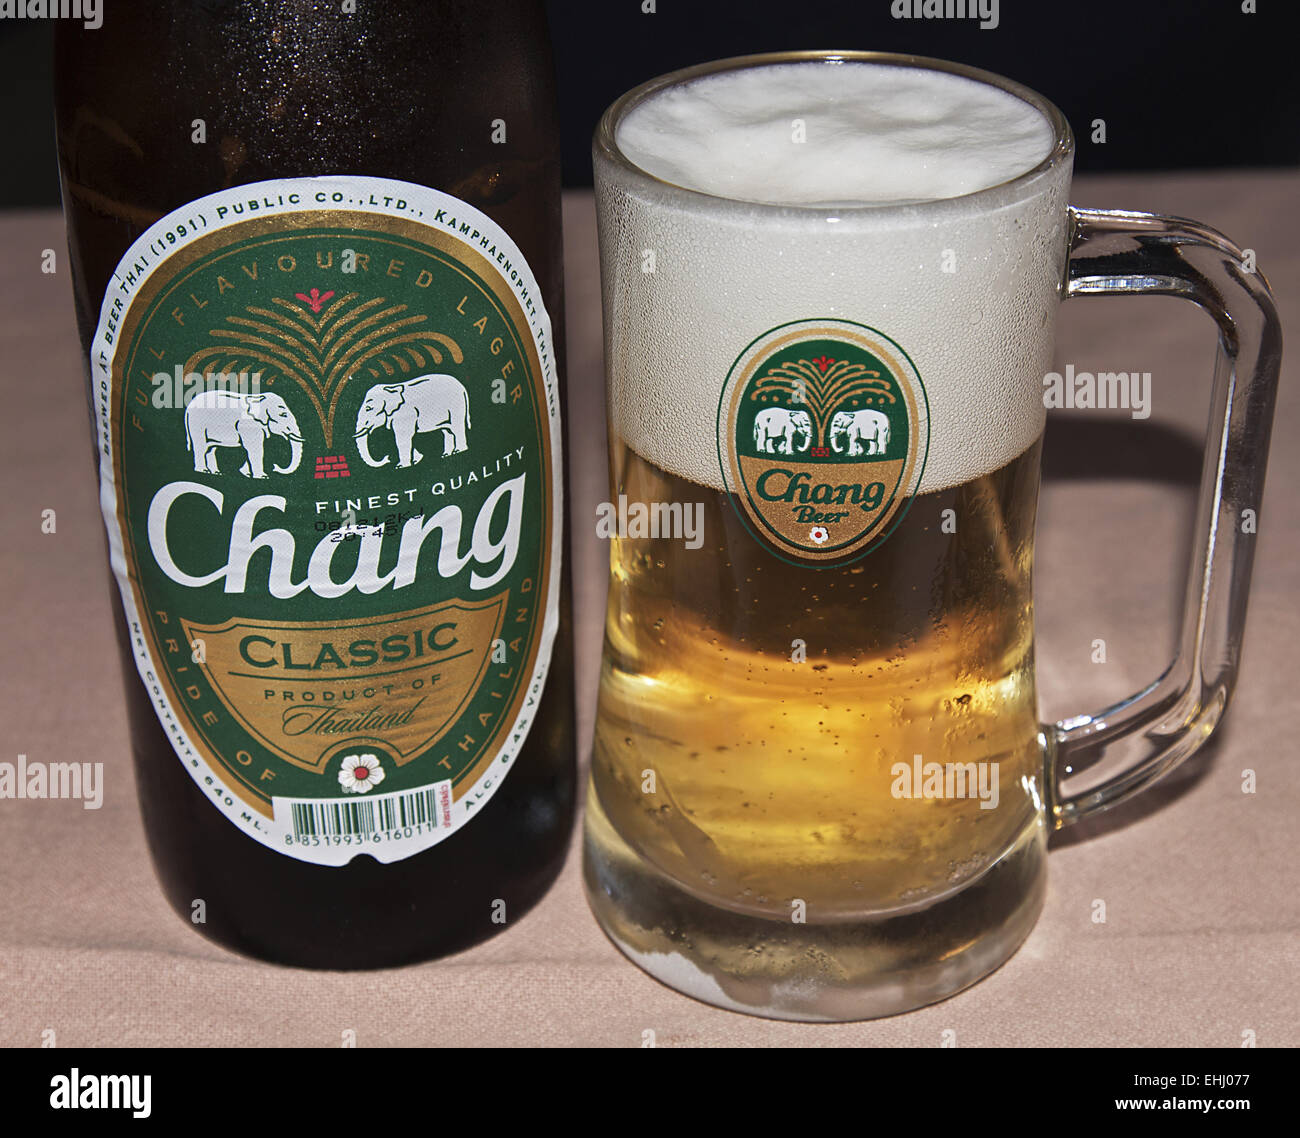 Chang Beer Stock Photo